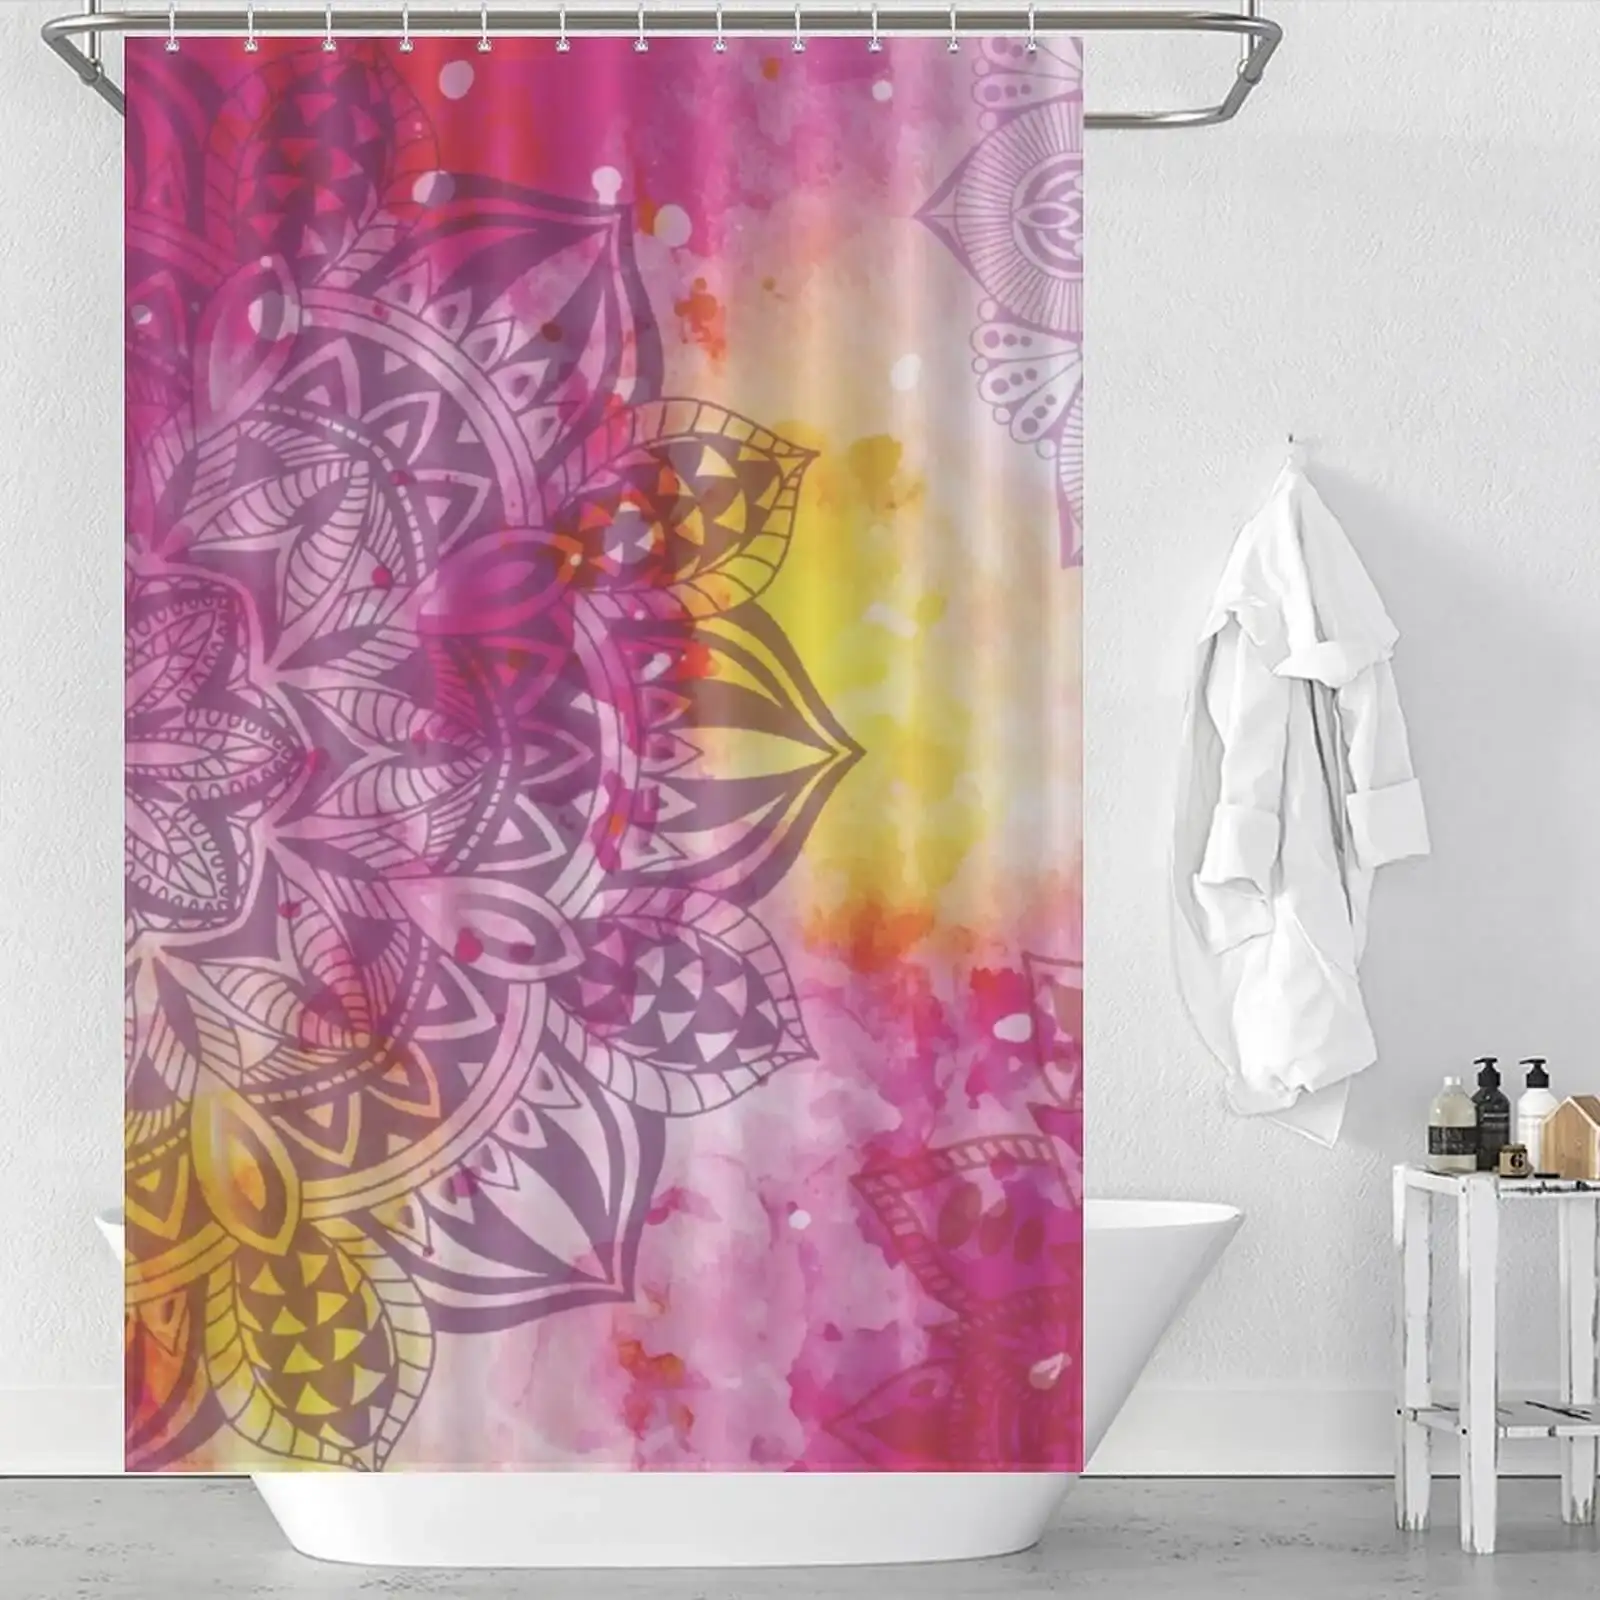 Pink and yellow mandala shower curtain.